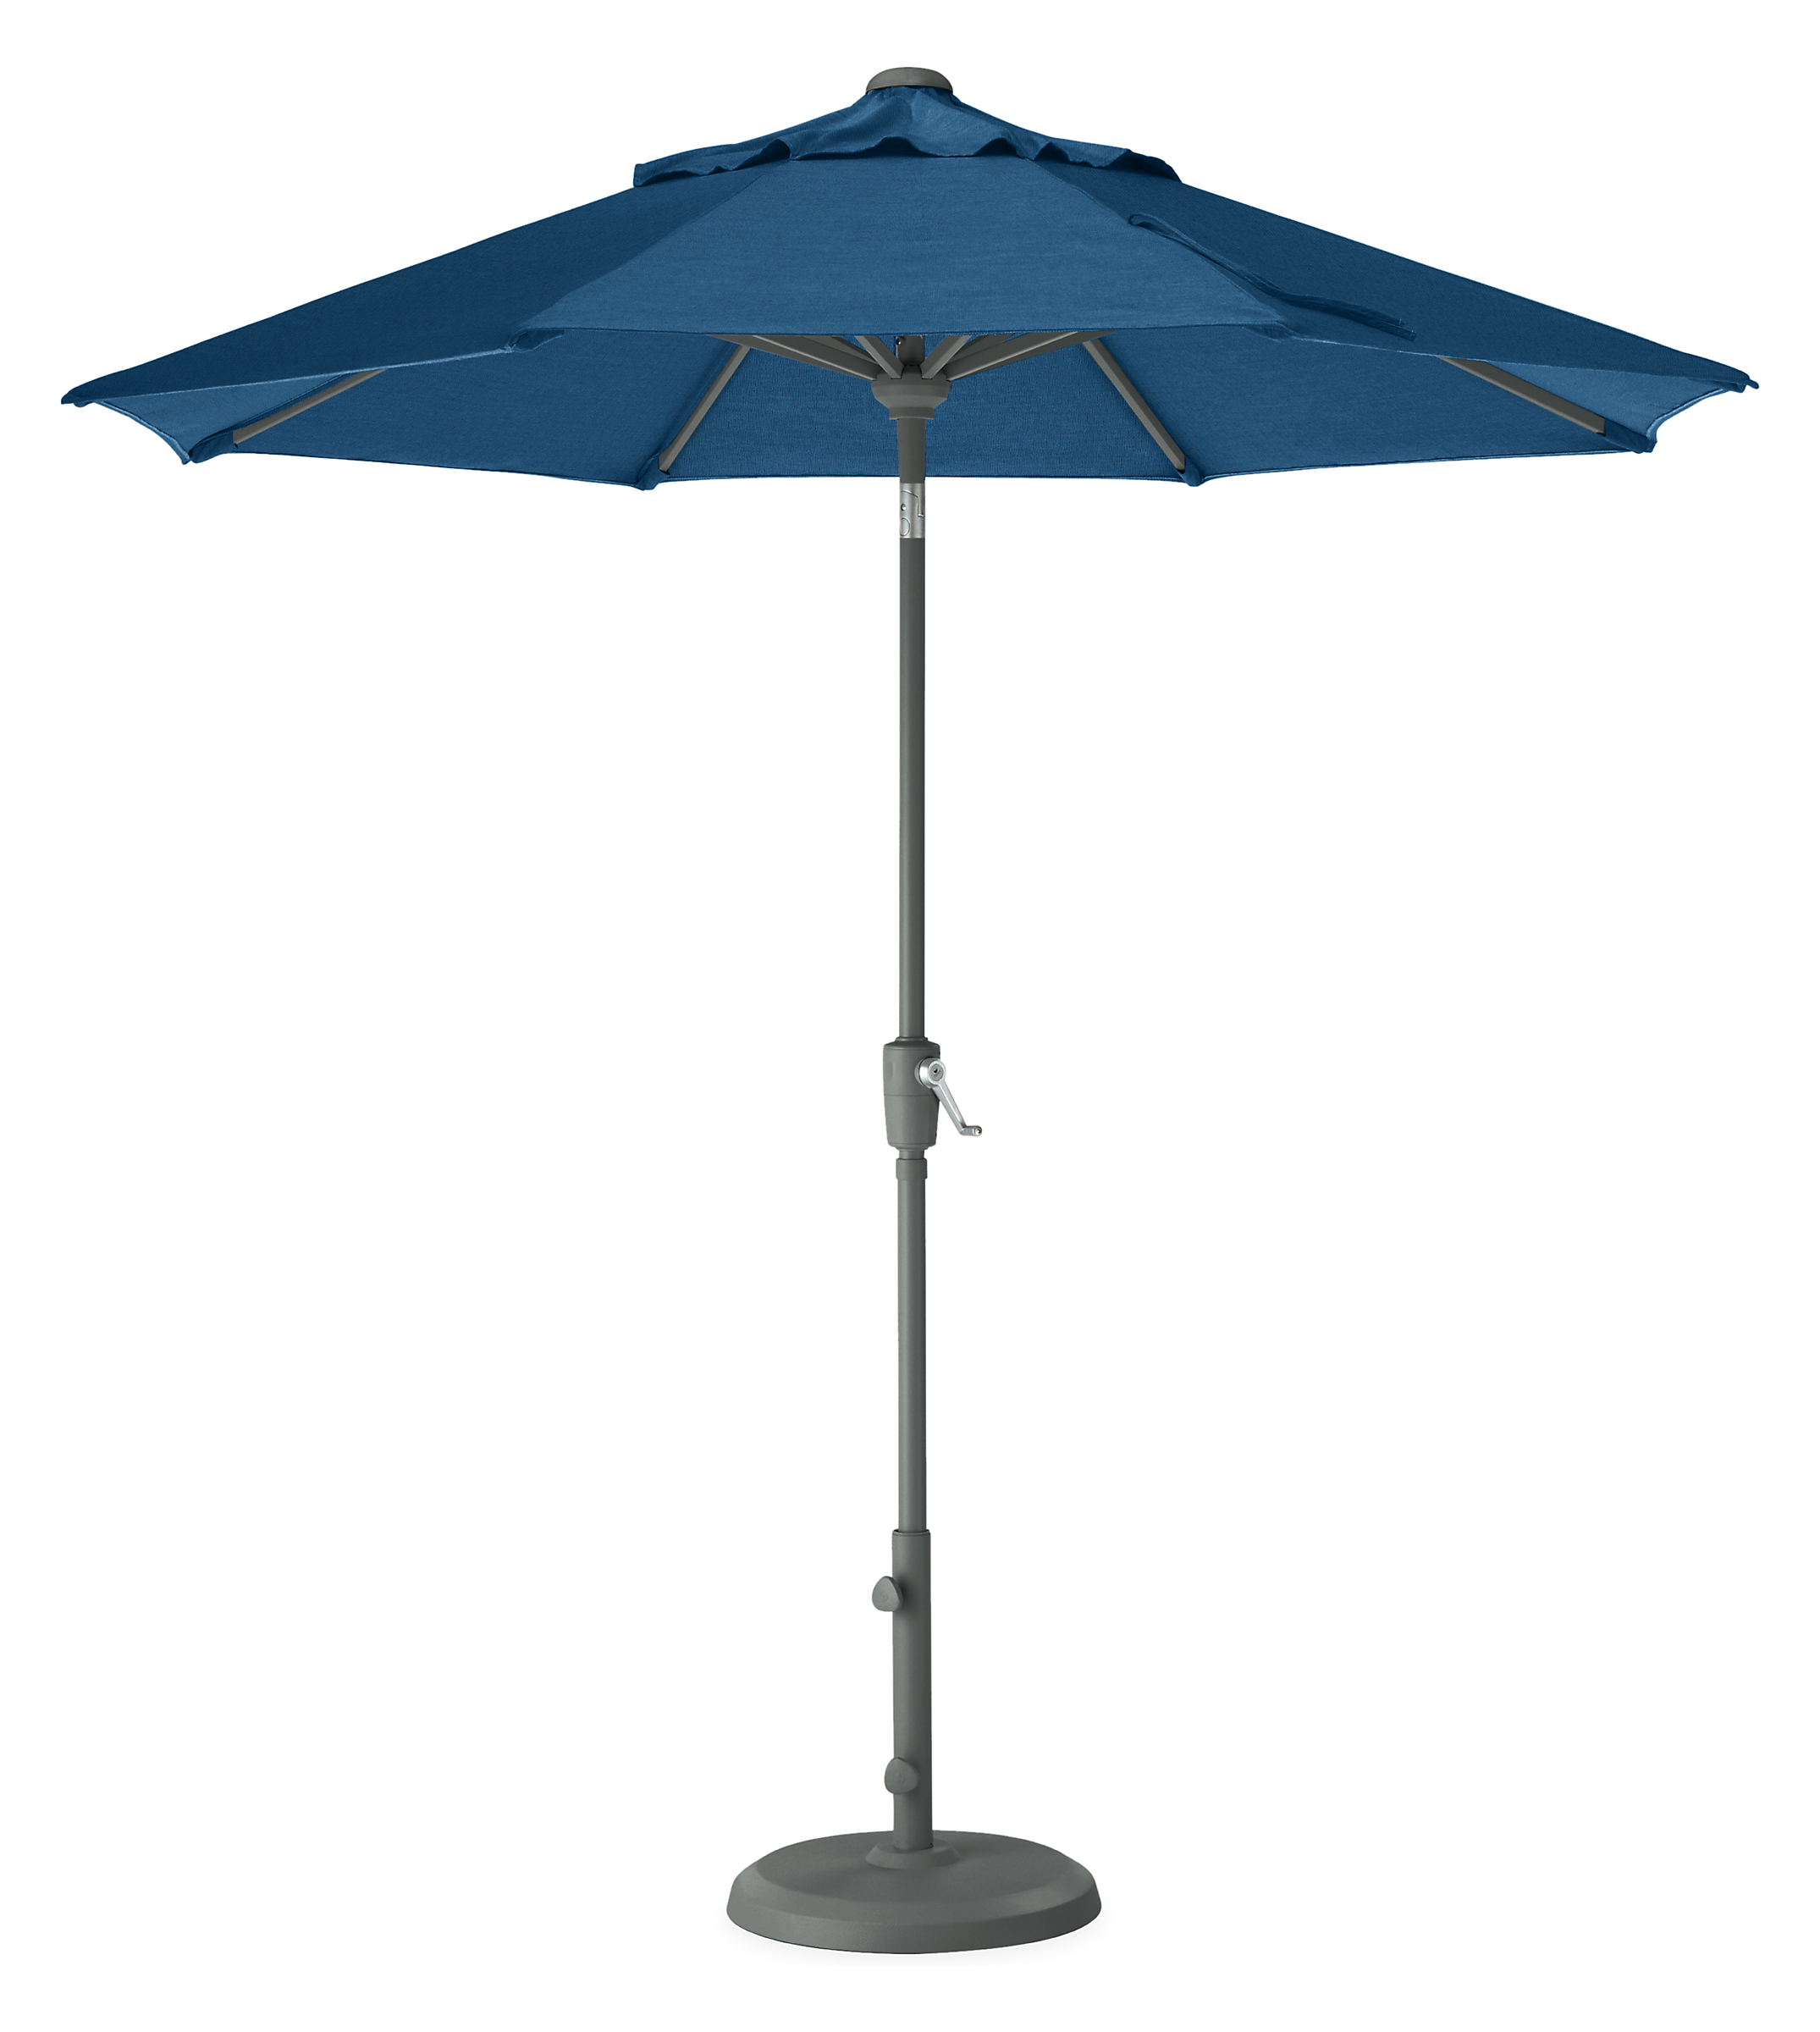 Maui 7.5' Round Patio Umbrella with Base